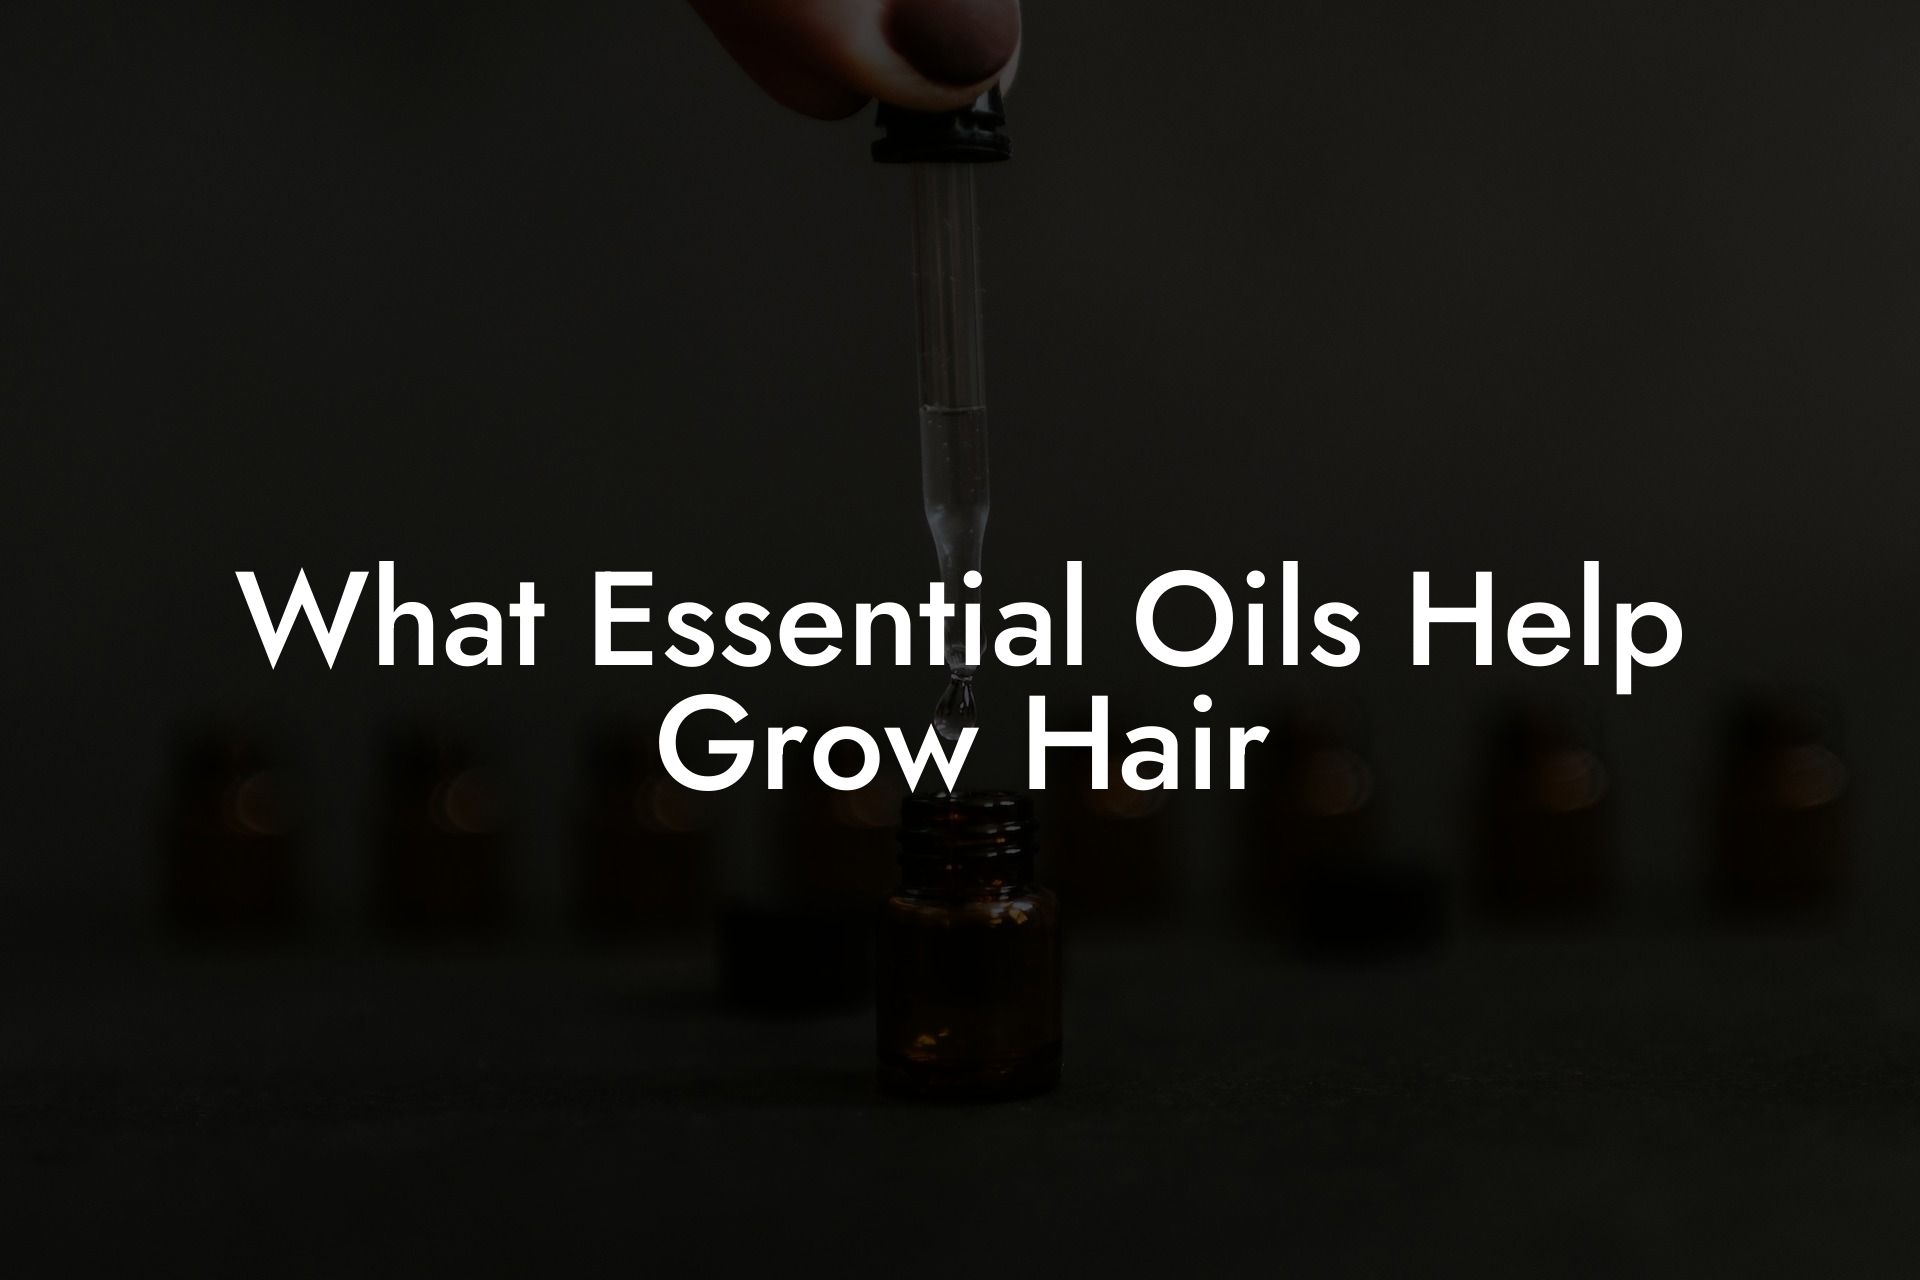 What Essential Oils Help Grow Hair